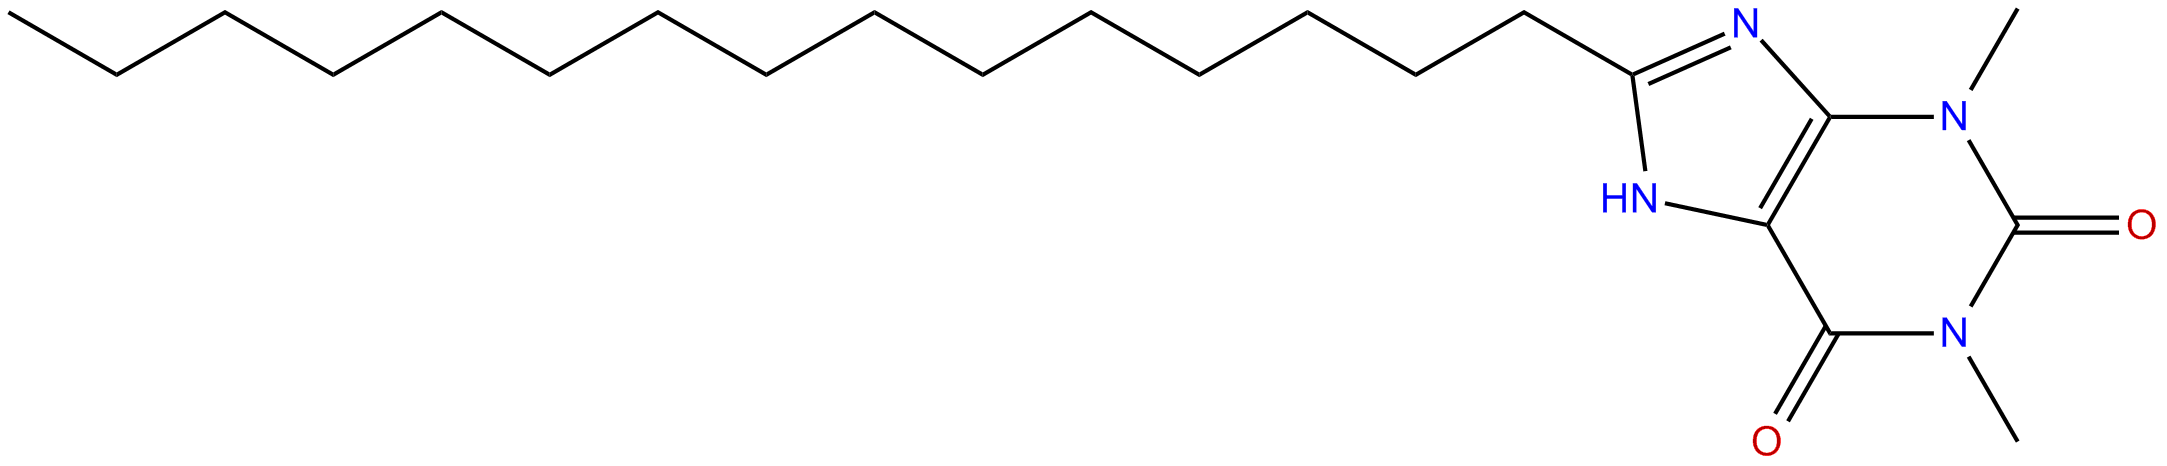 Image of 8-pentadecyl-1,3-dihydro-1,3-dimethyl-1H-purine-2,6-dione